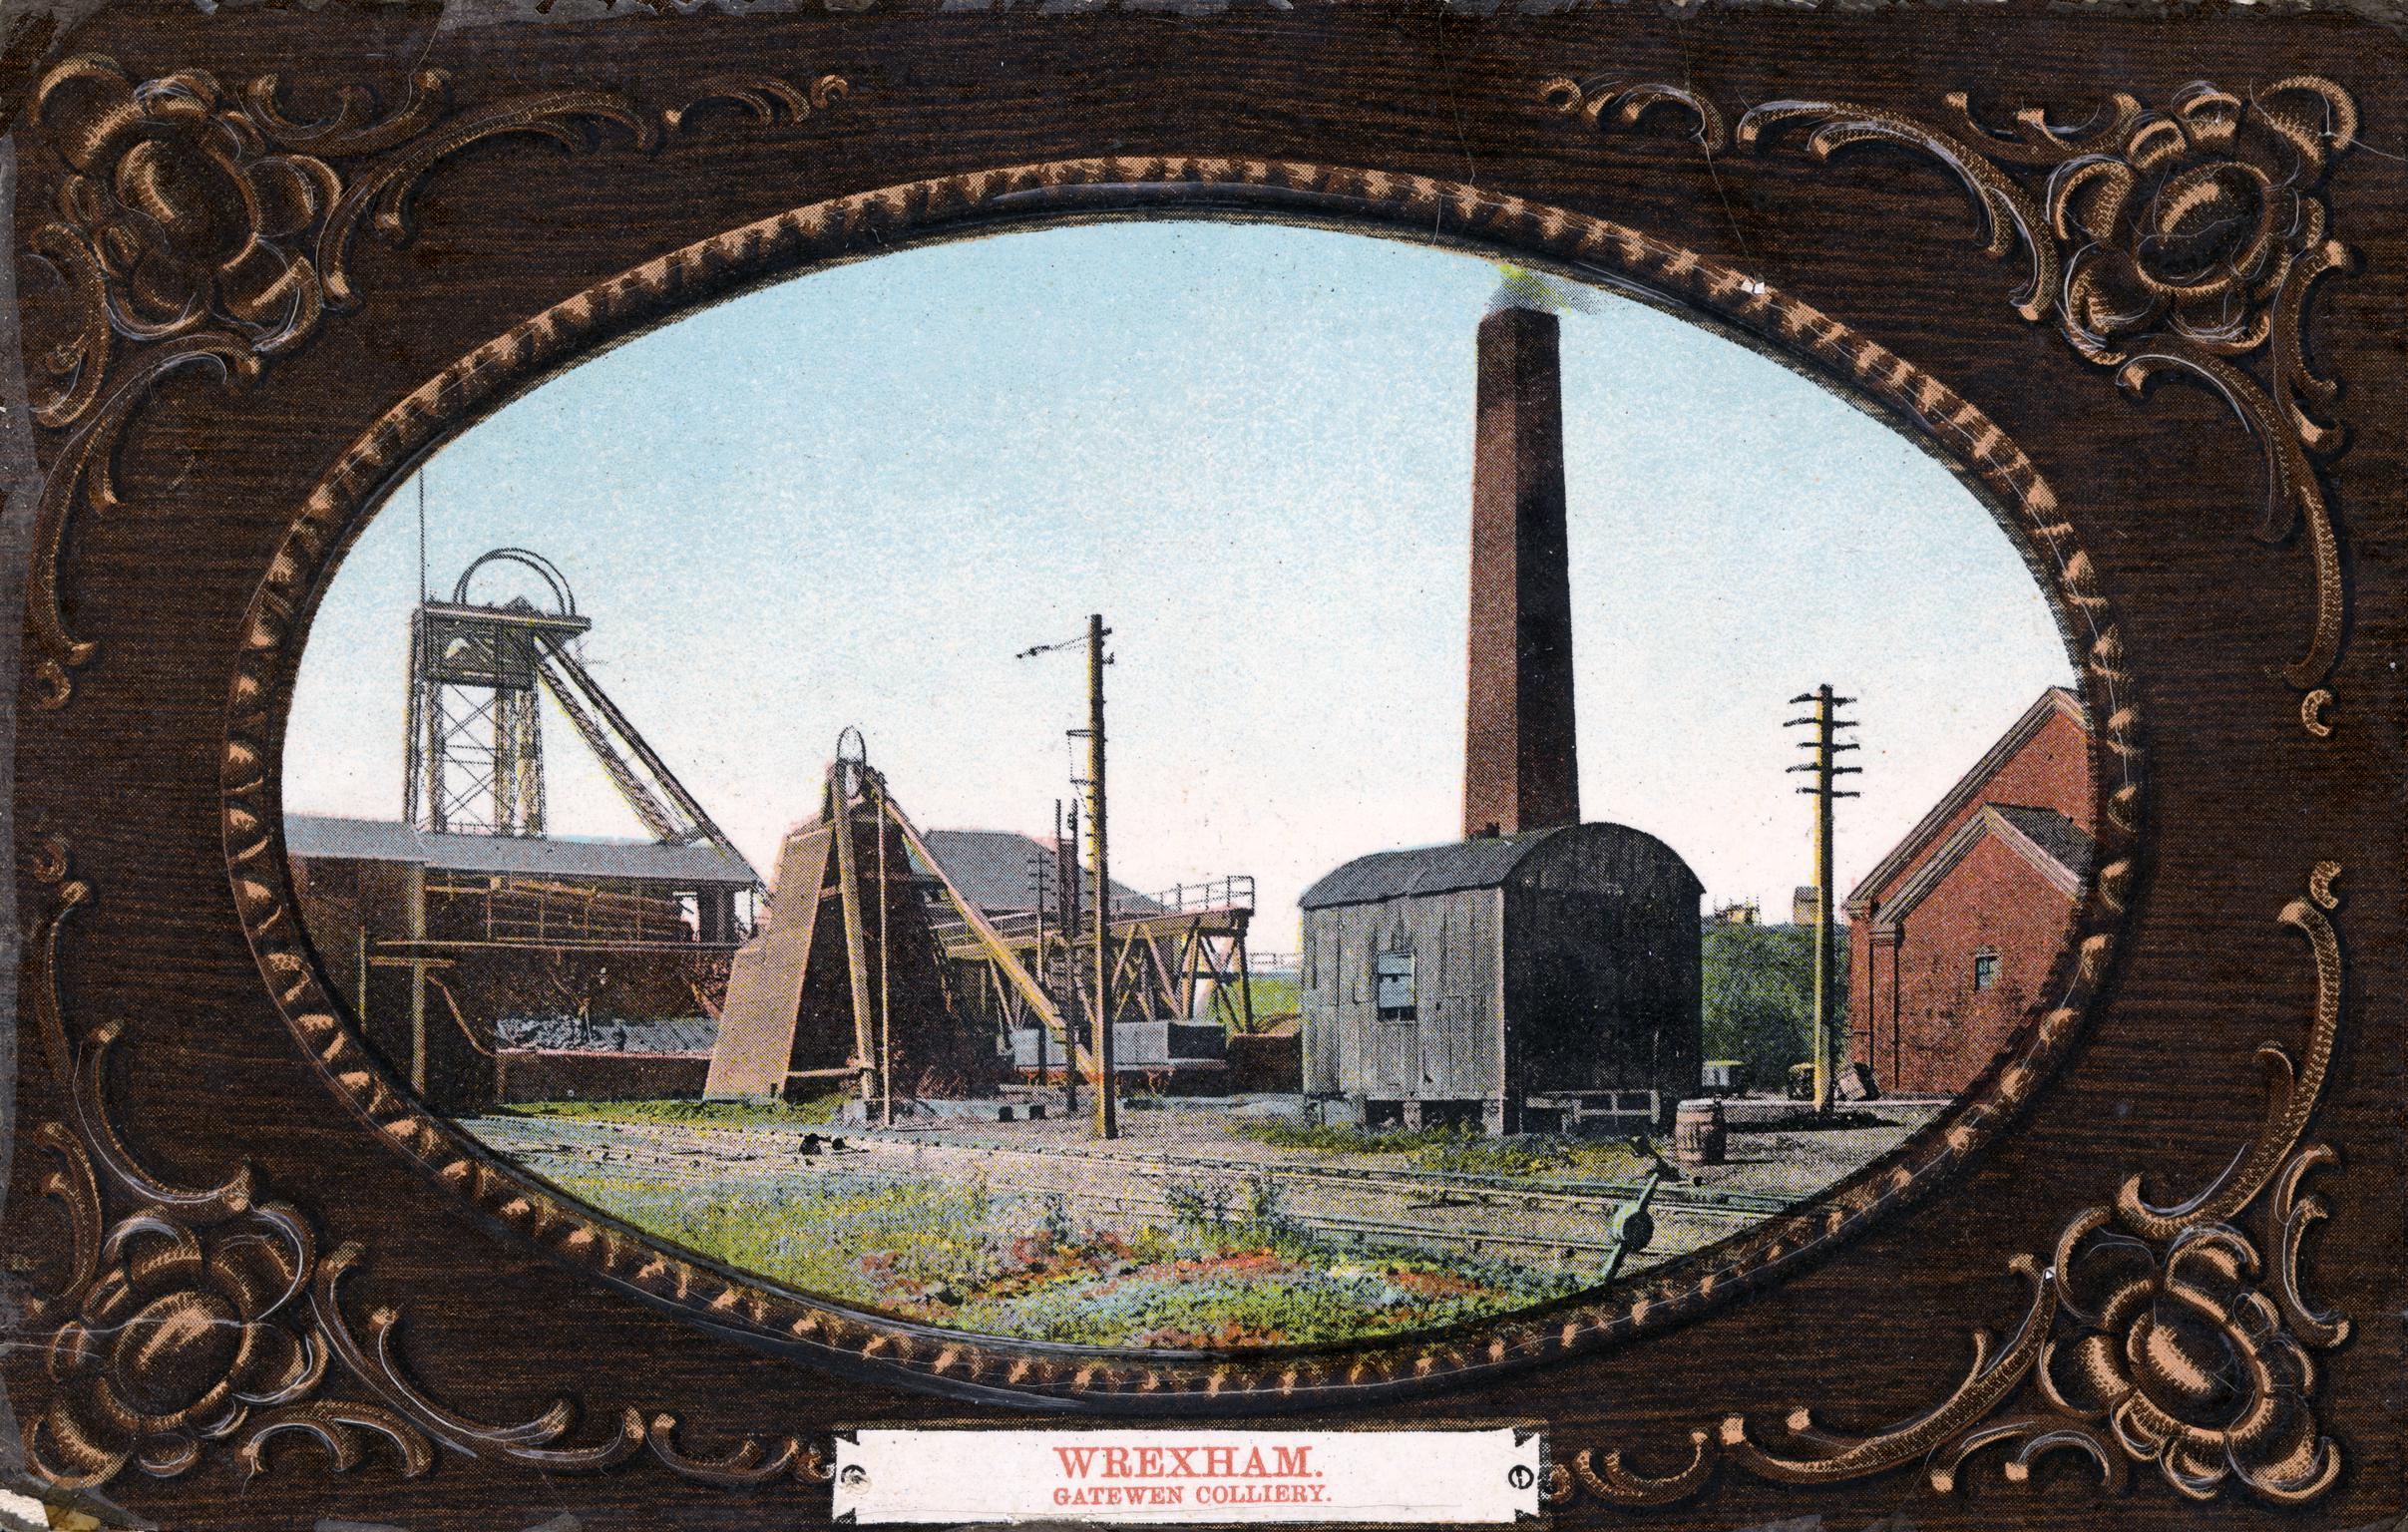 Wrexham Gatewen Colliery (postcard)